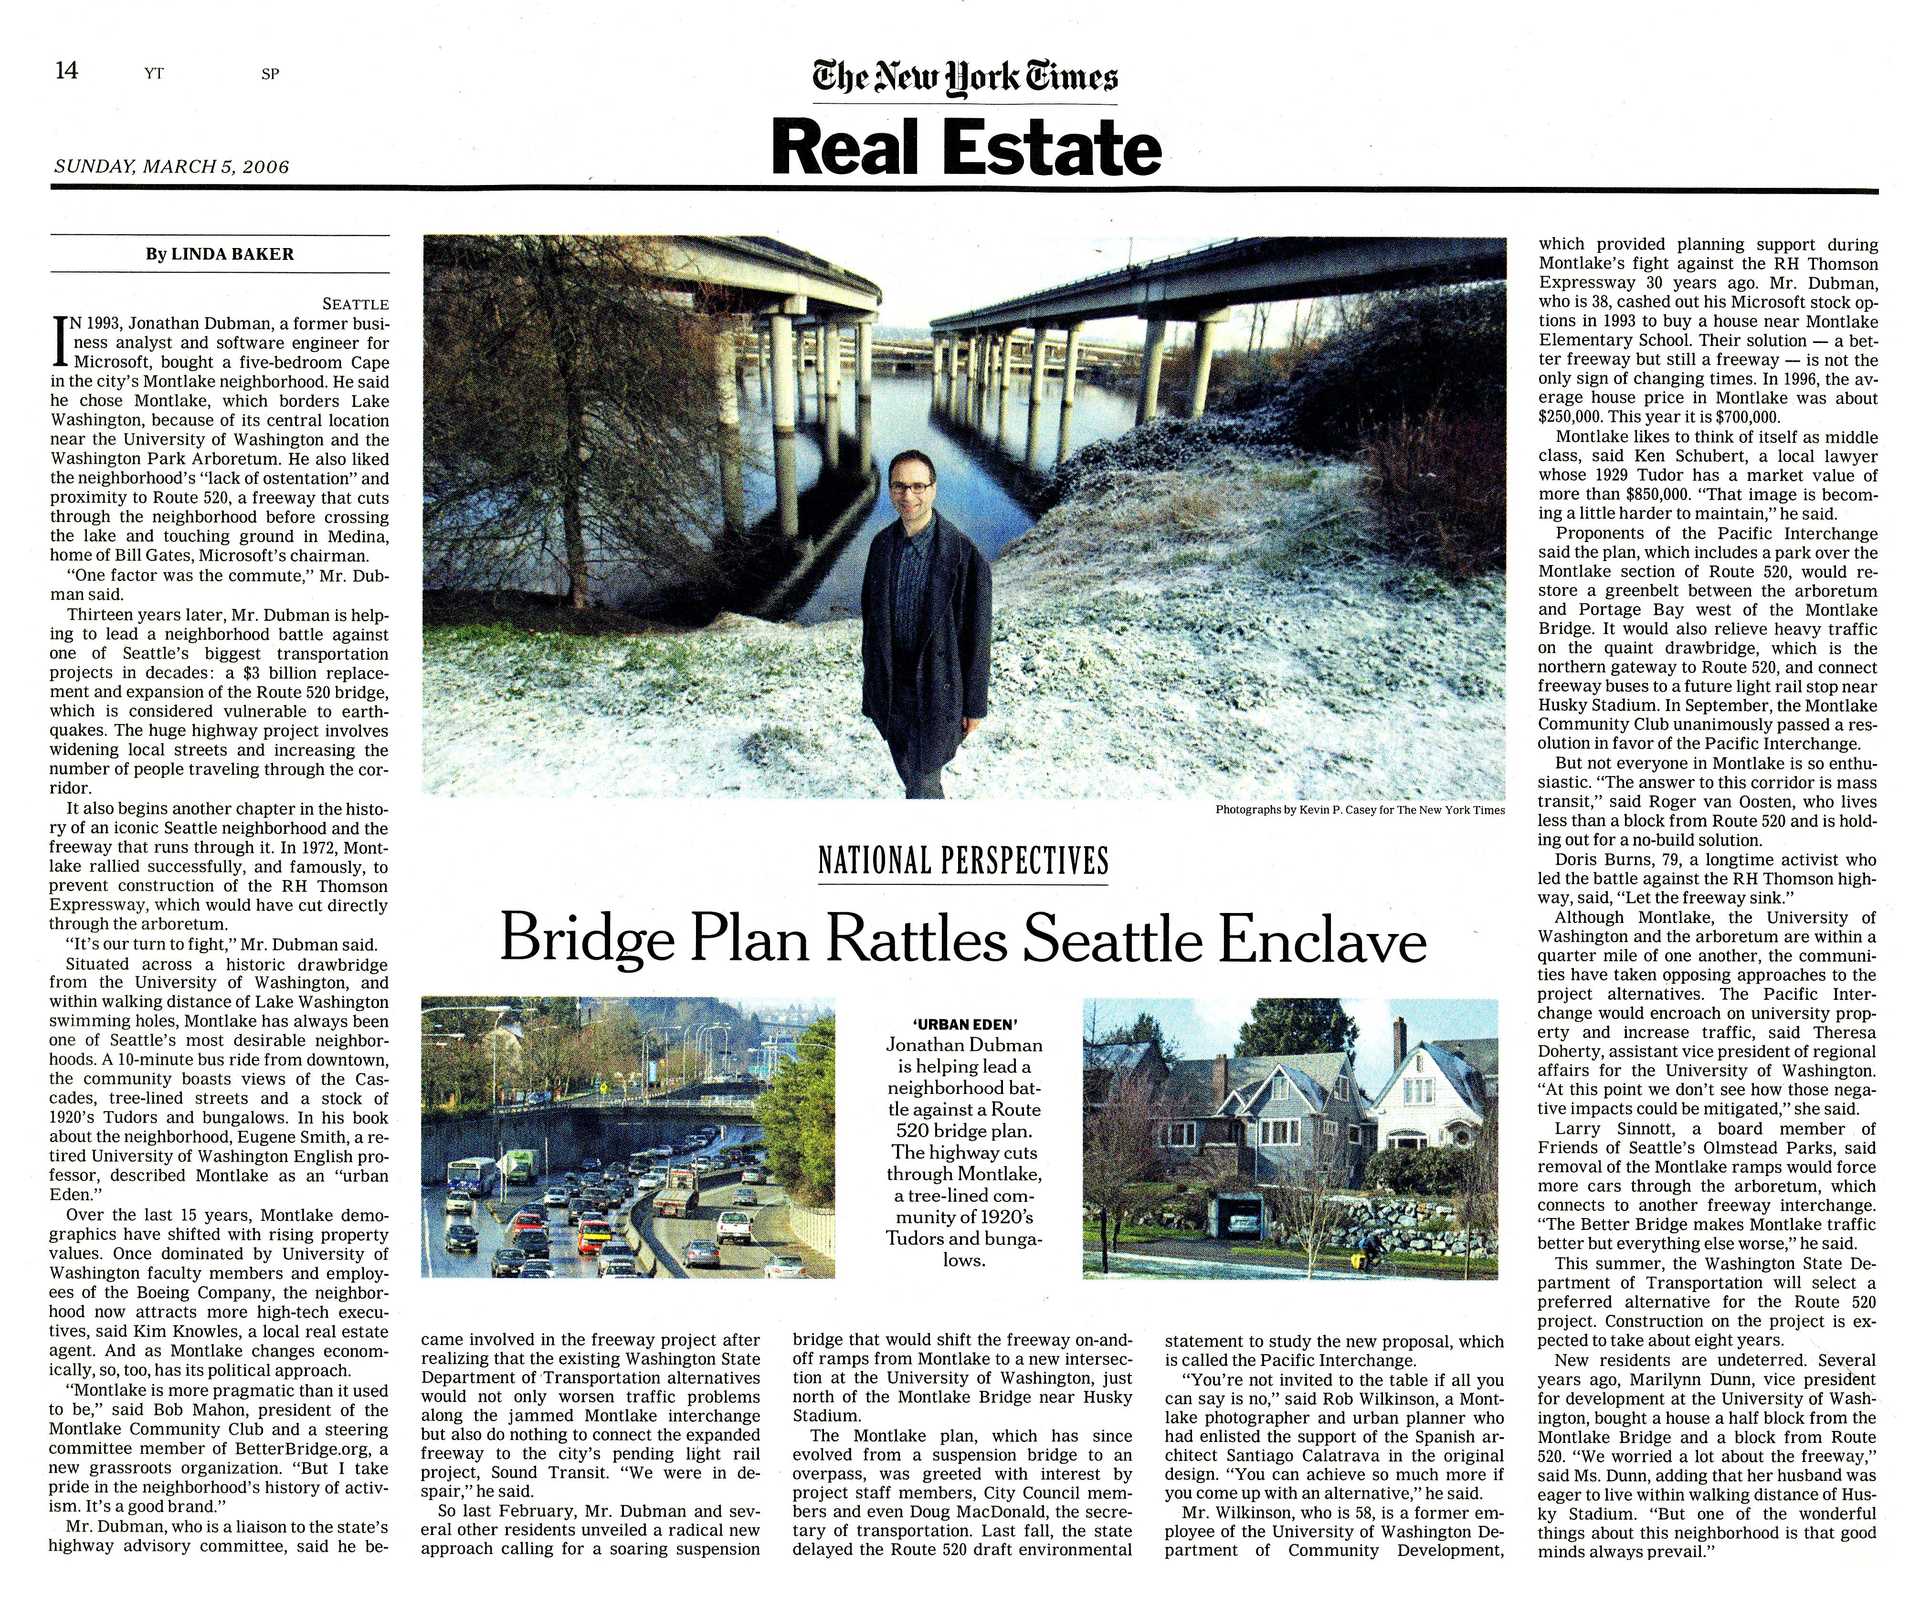 New York Times March 5, 2006 - Bridge Plan Rattles Seattle Enclave